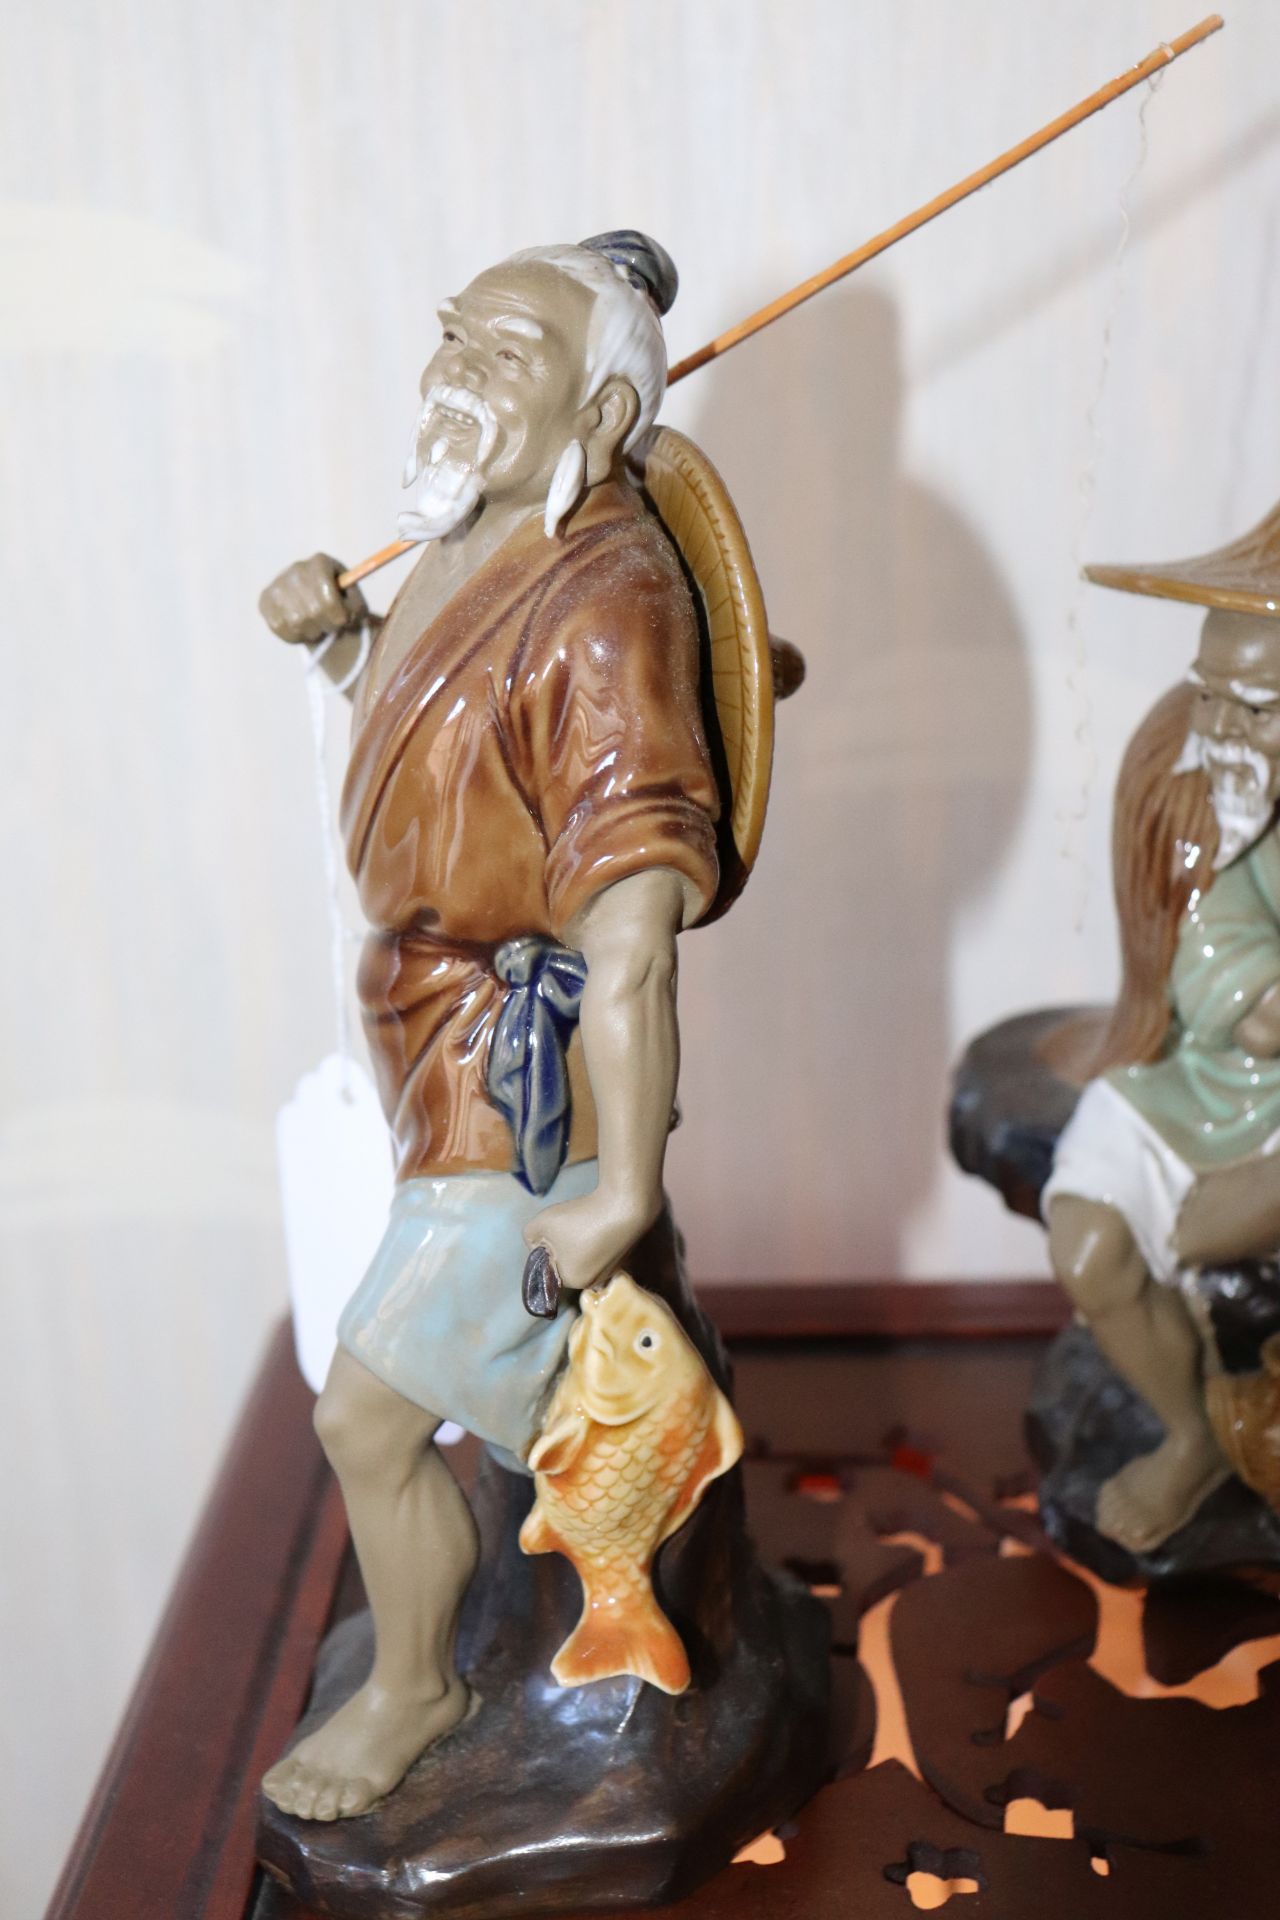 Oriental figurine of man fishing, ceramic, height 10"